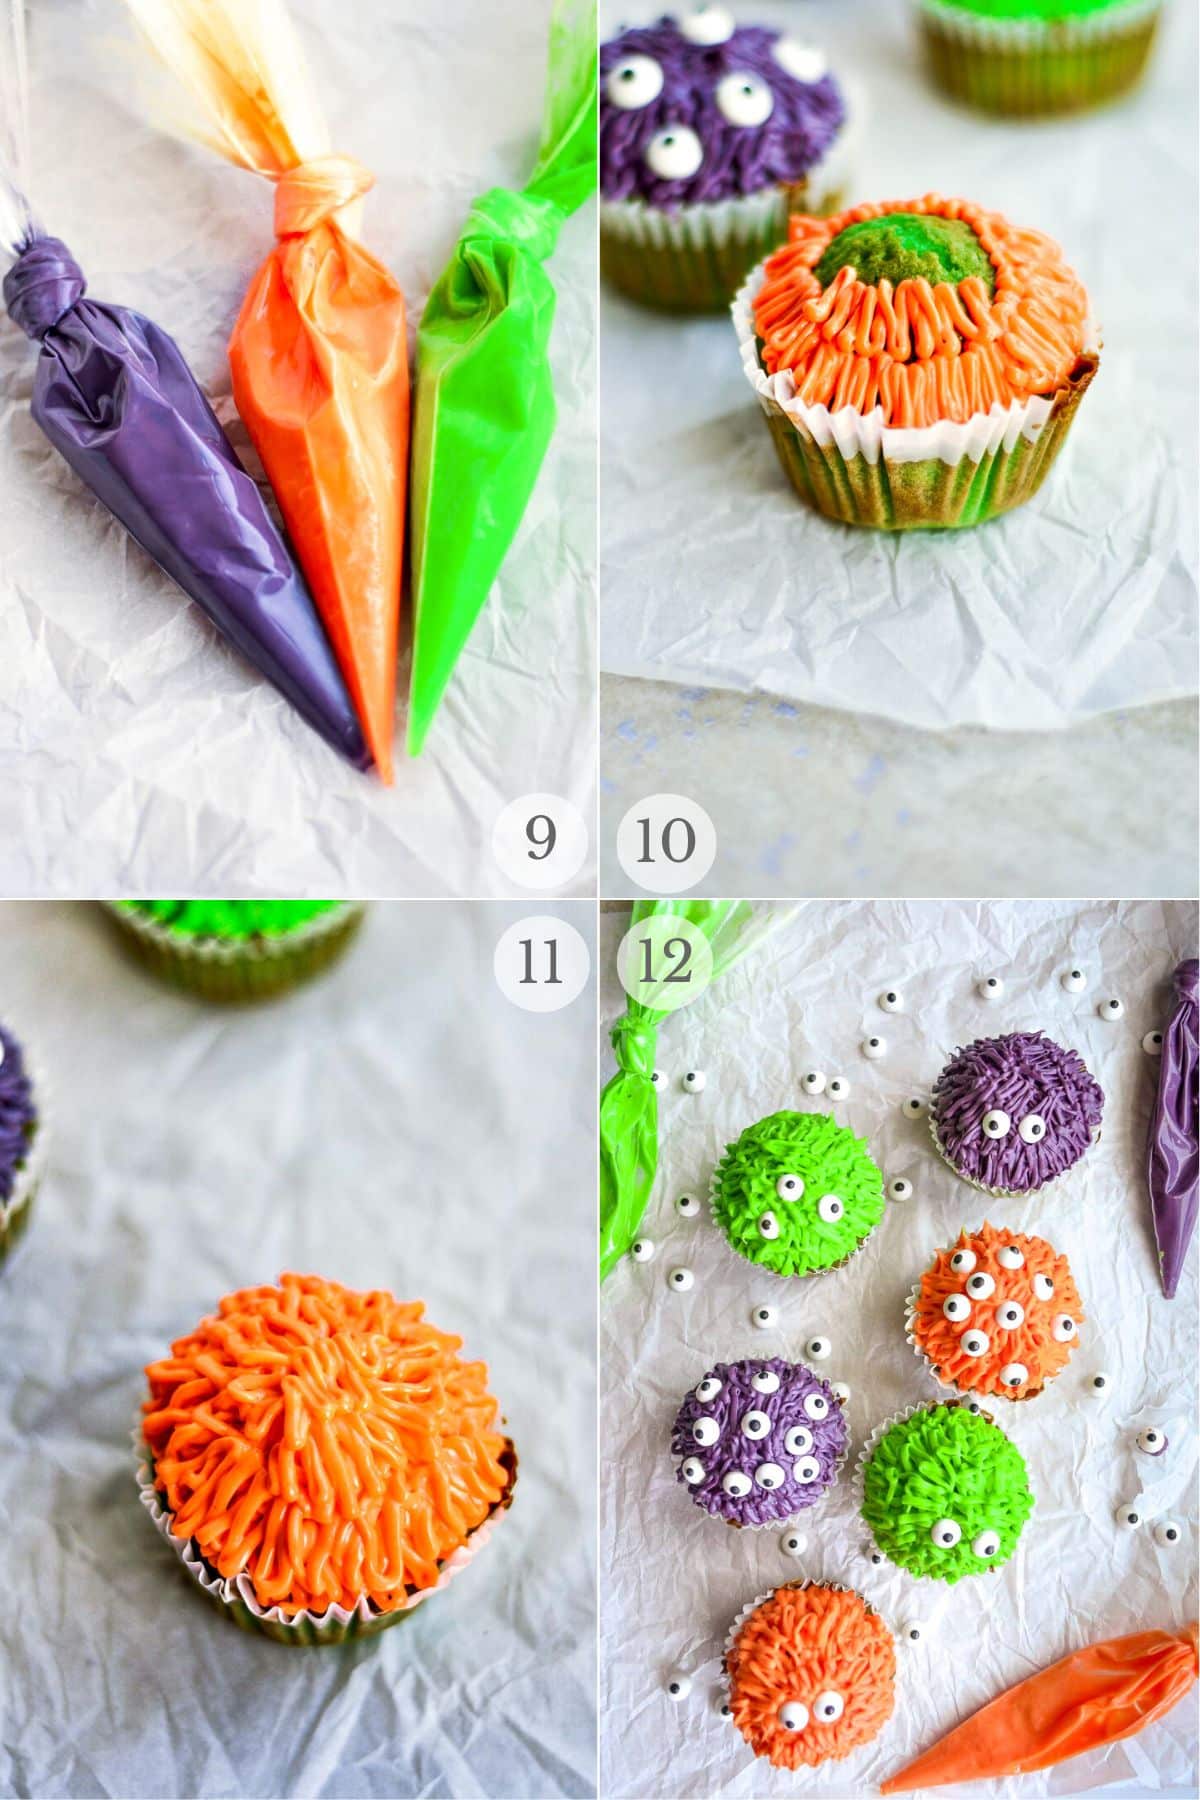 monster cupcakes recipe steps 9-12.